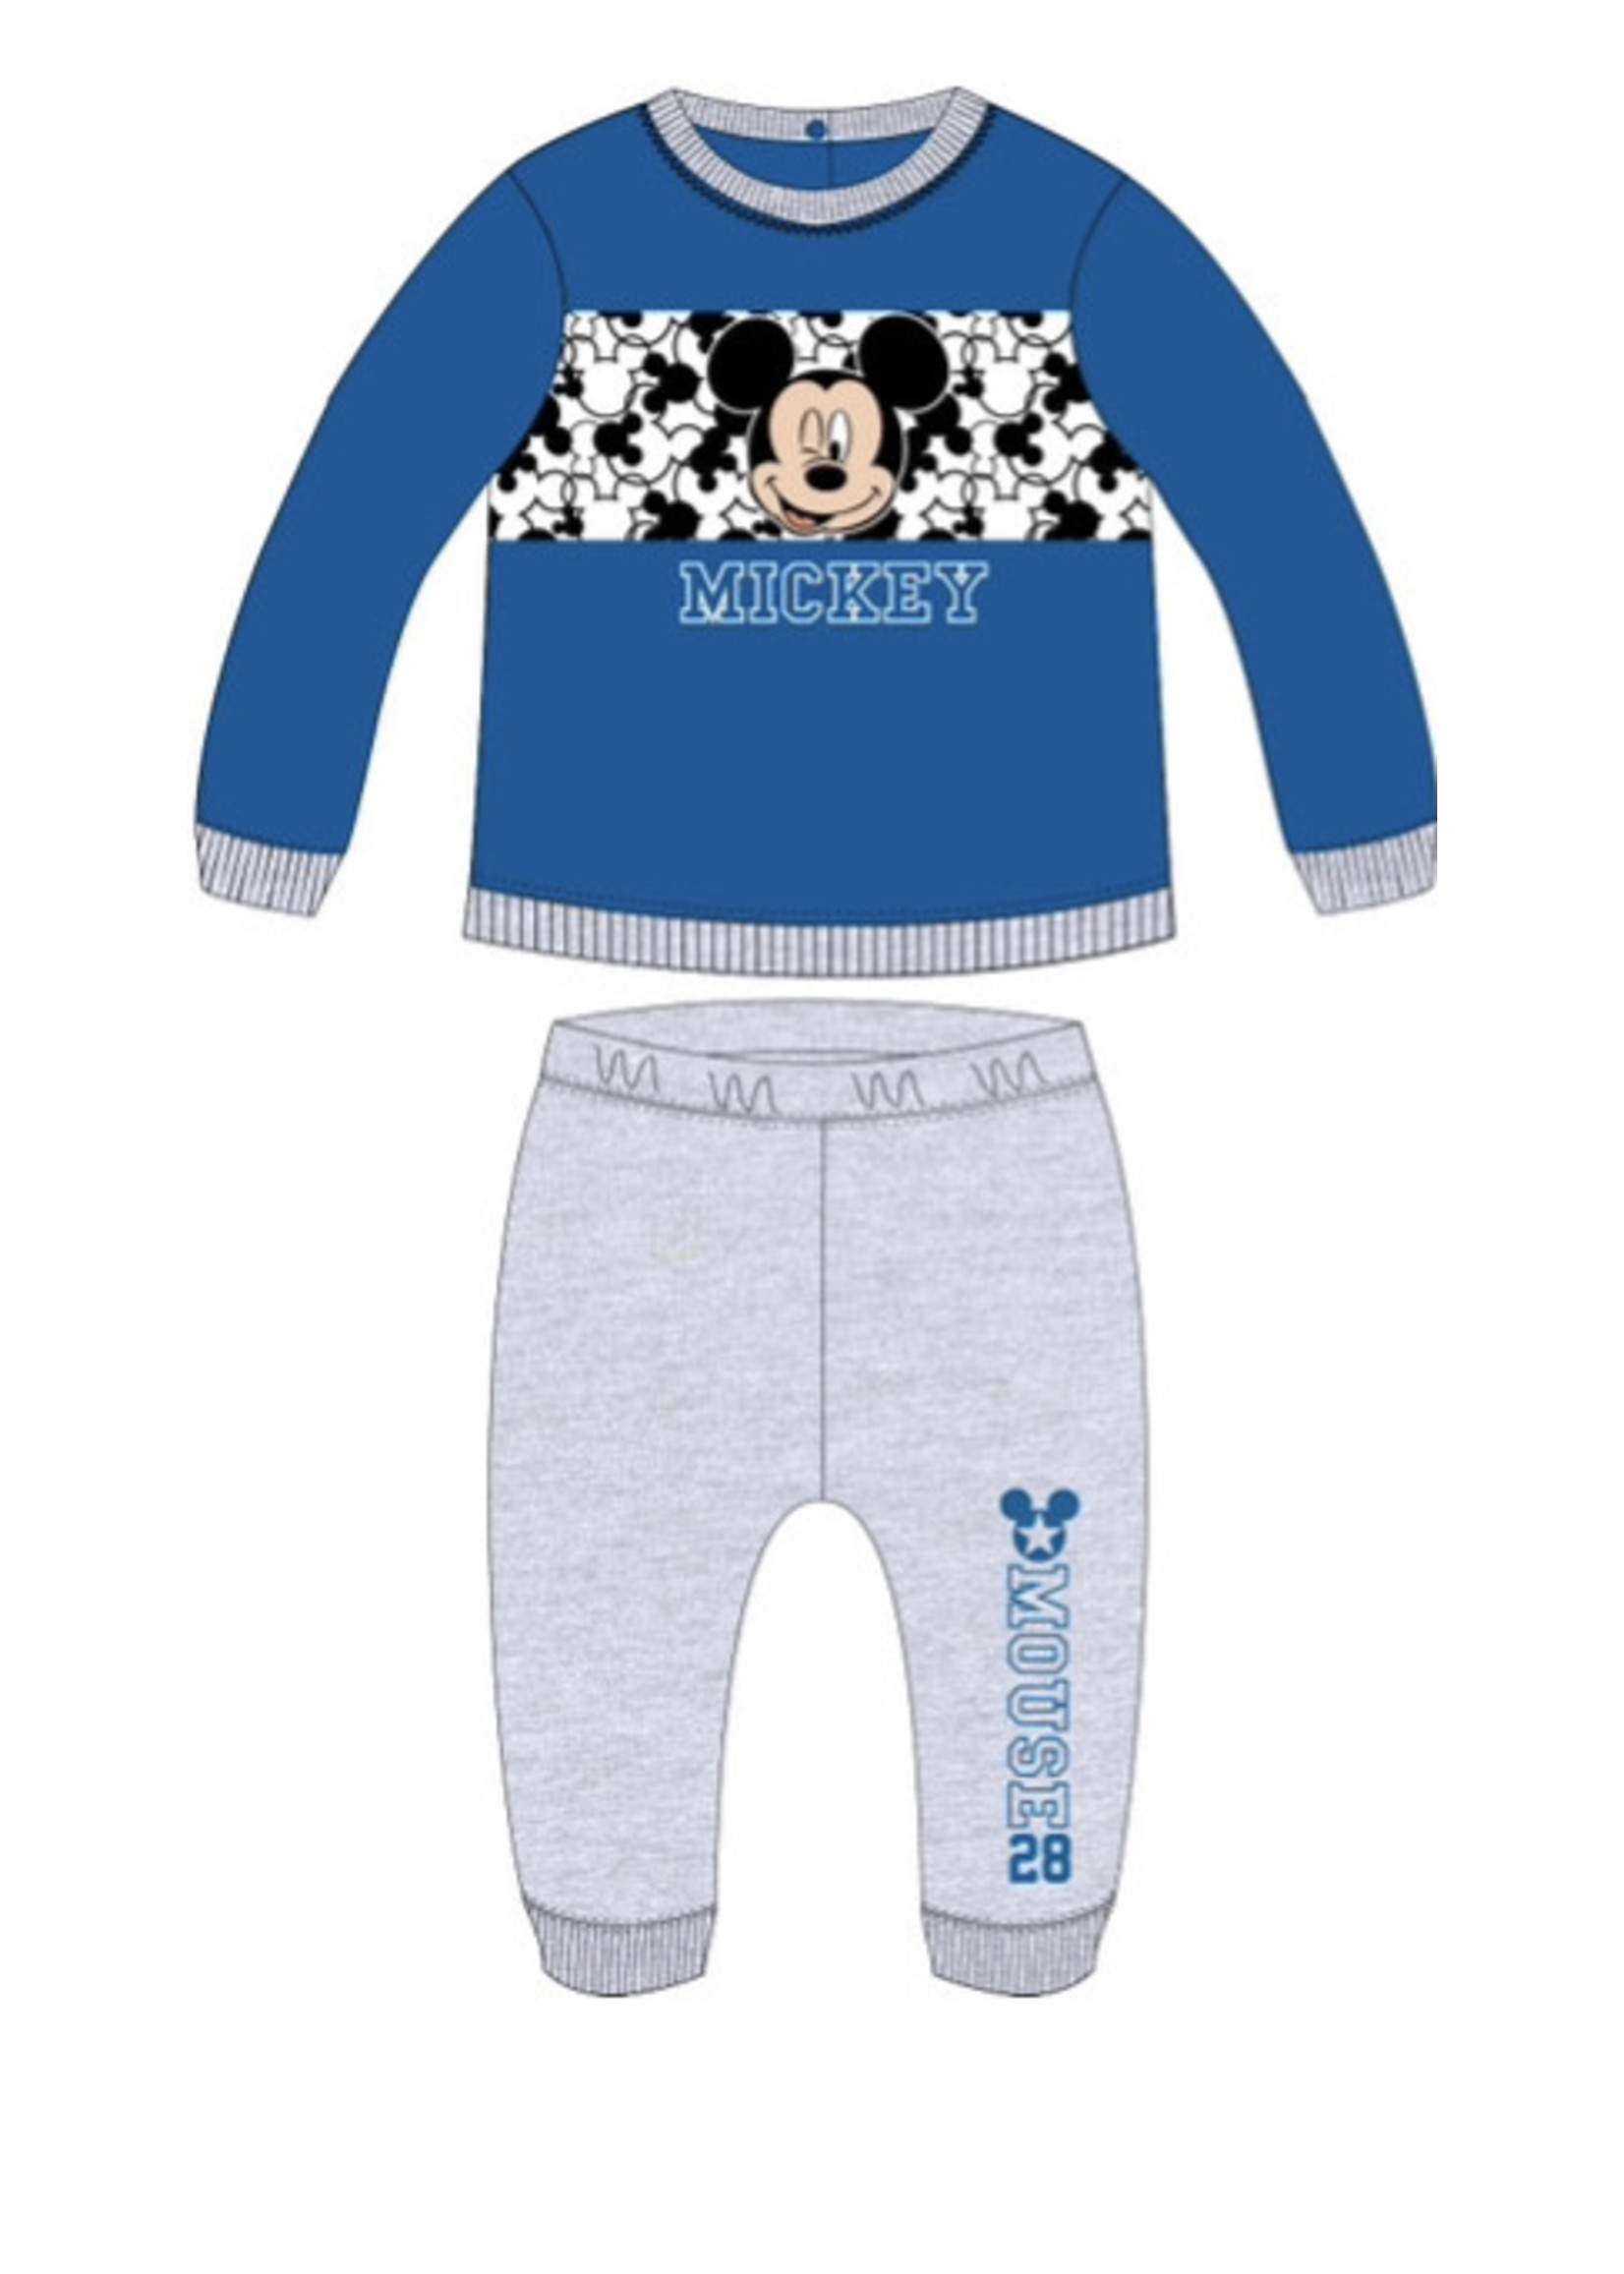 Disney Mickey Mouse baby set from Disney blue-grey